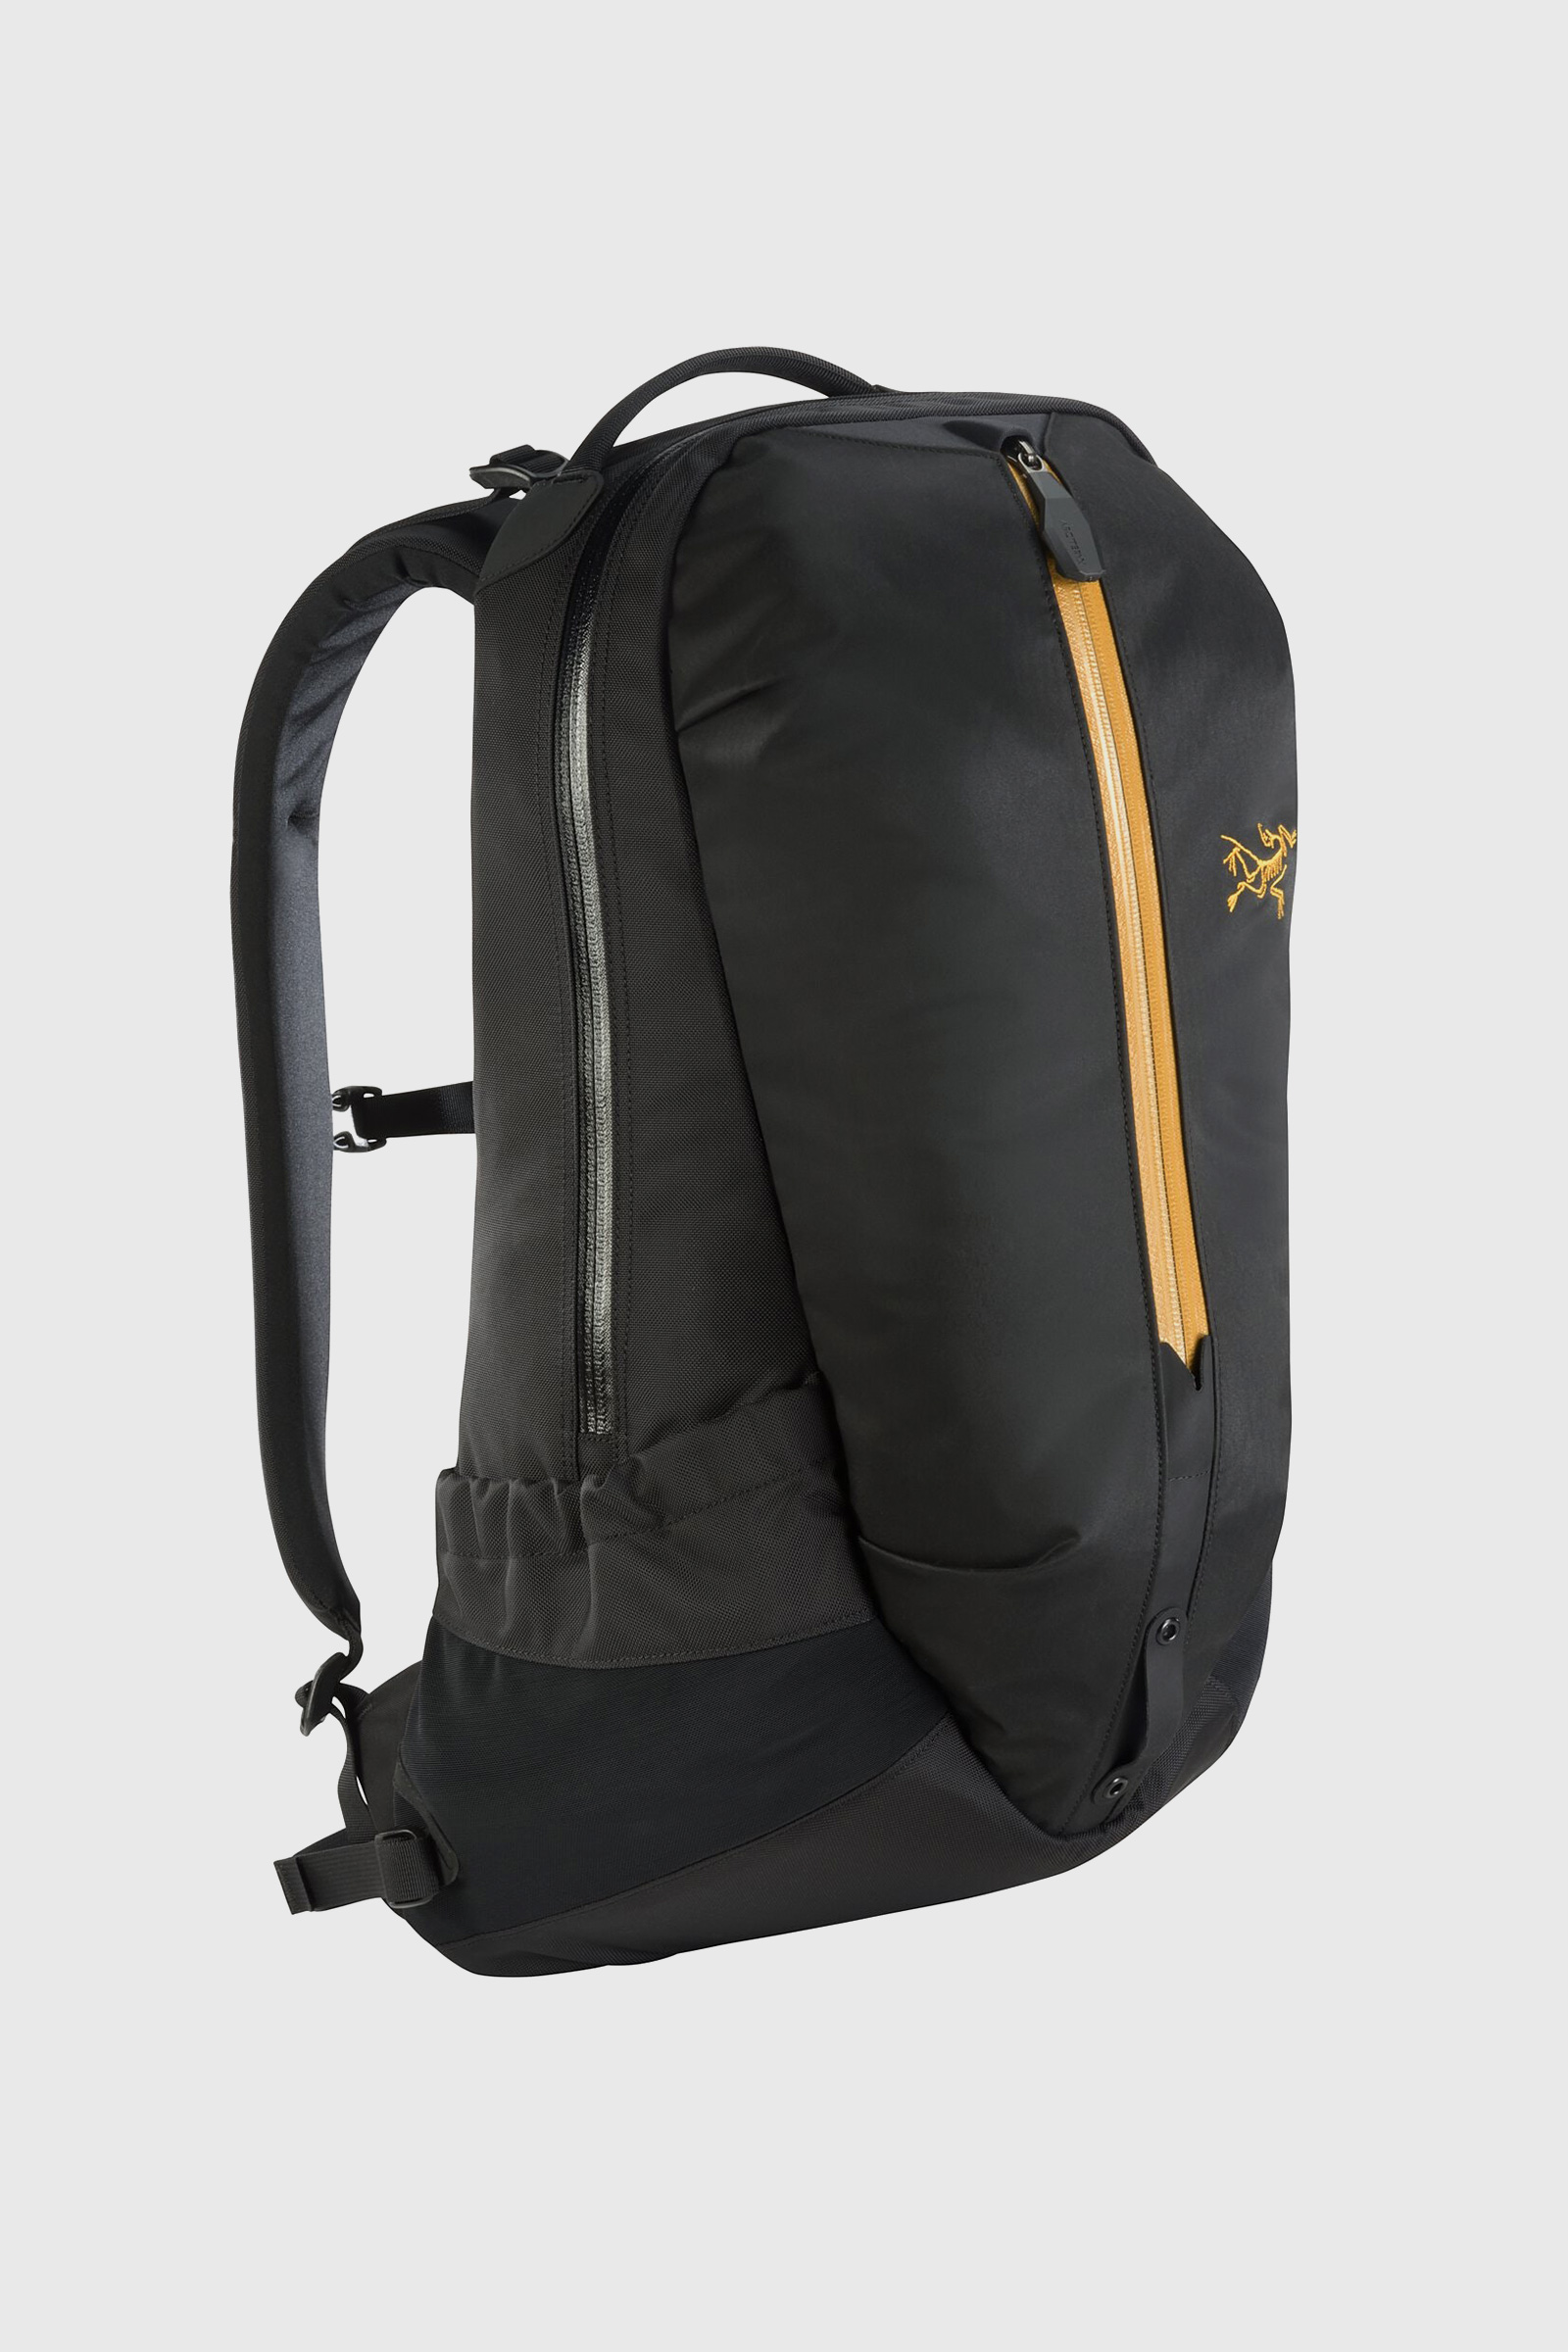 ARC'TERYX Arro 22 Backpack 24K black | WoodWood.com